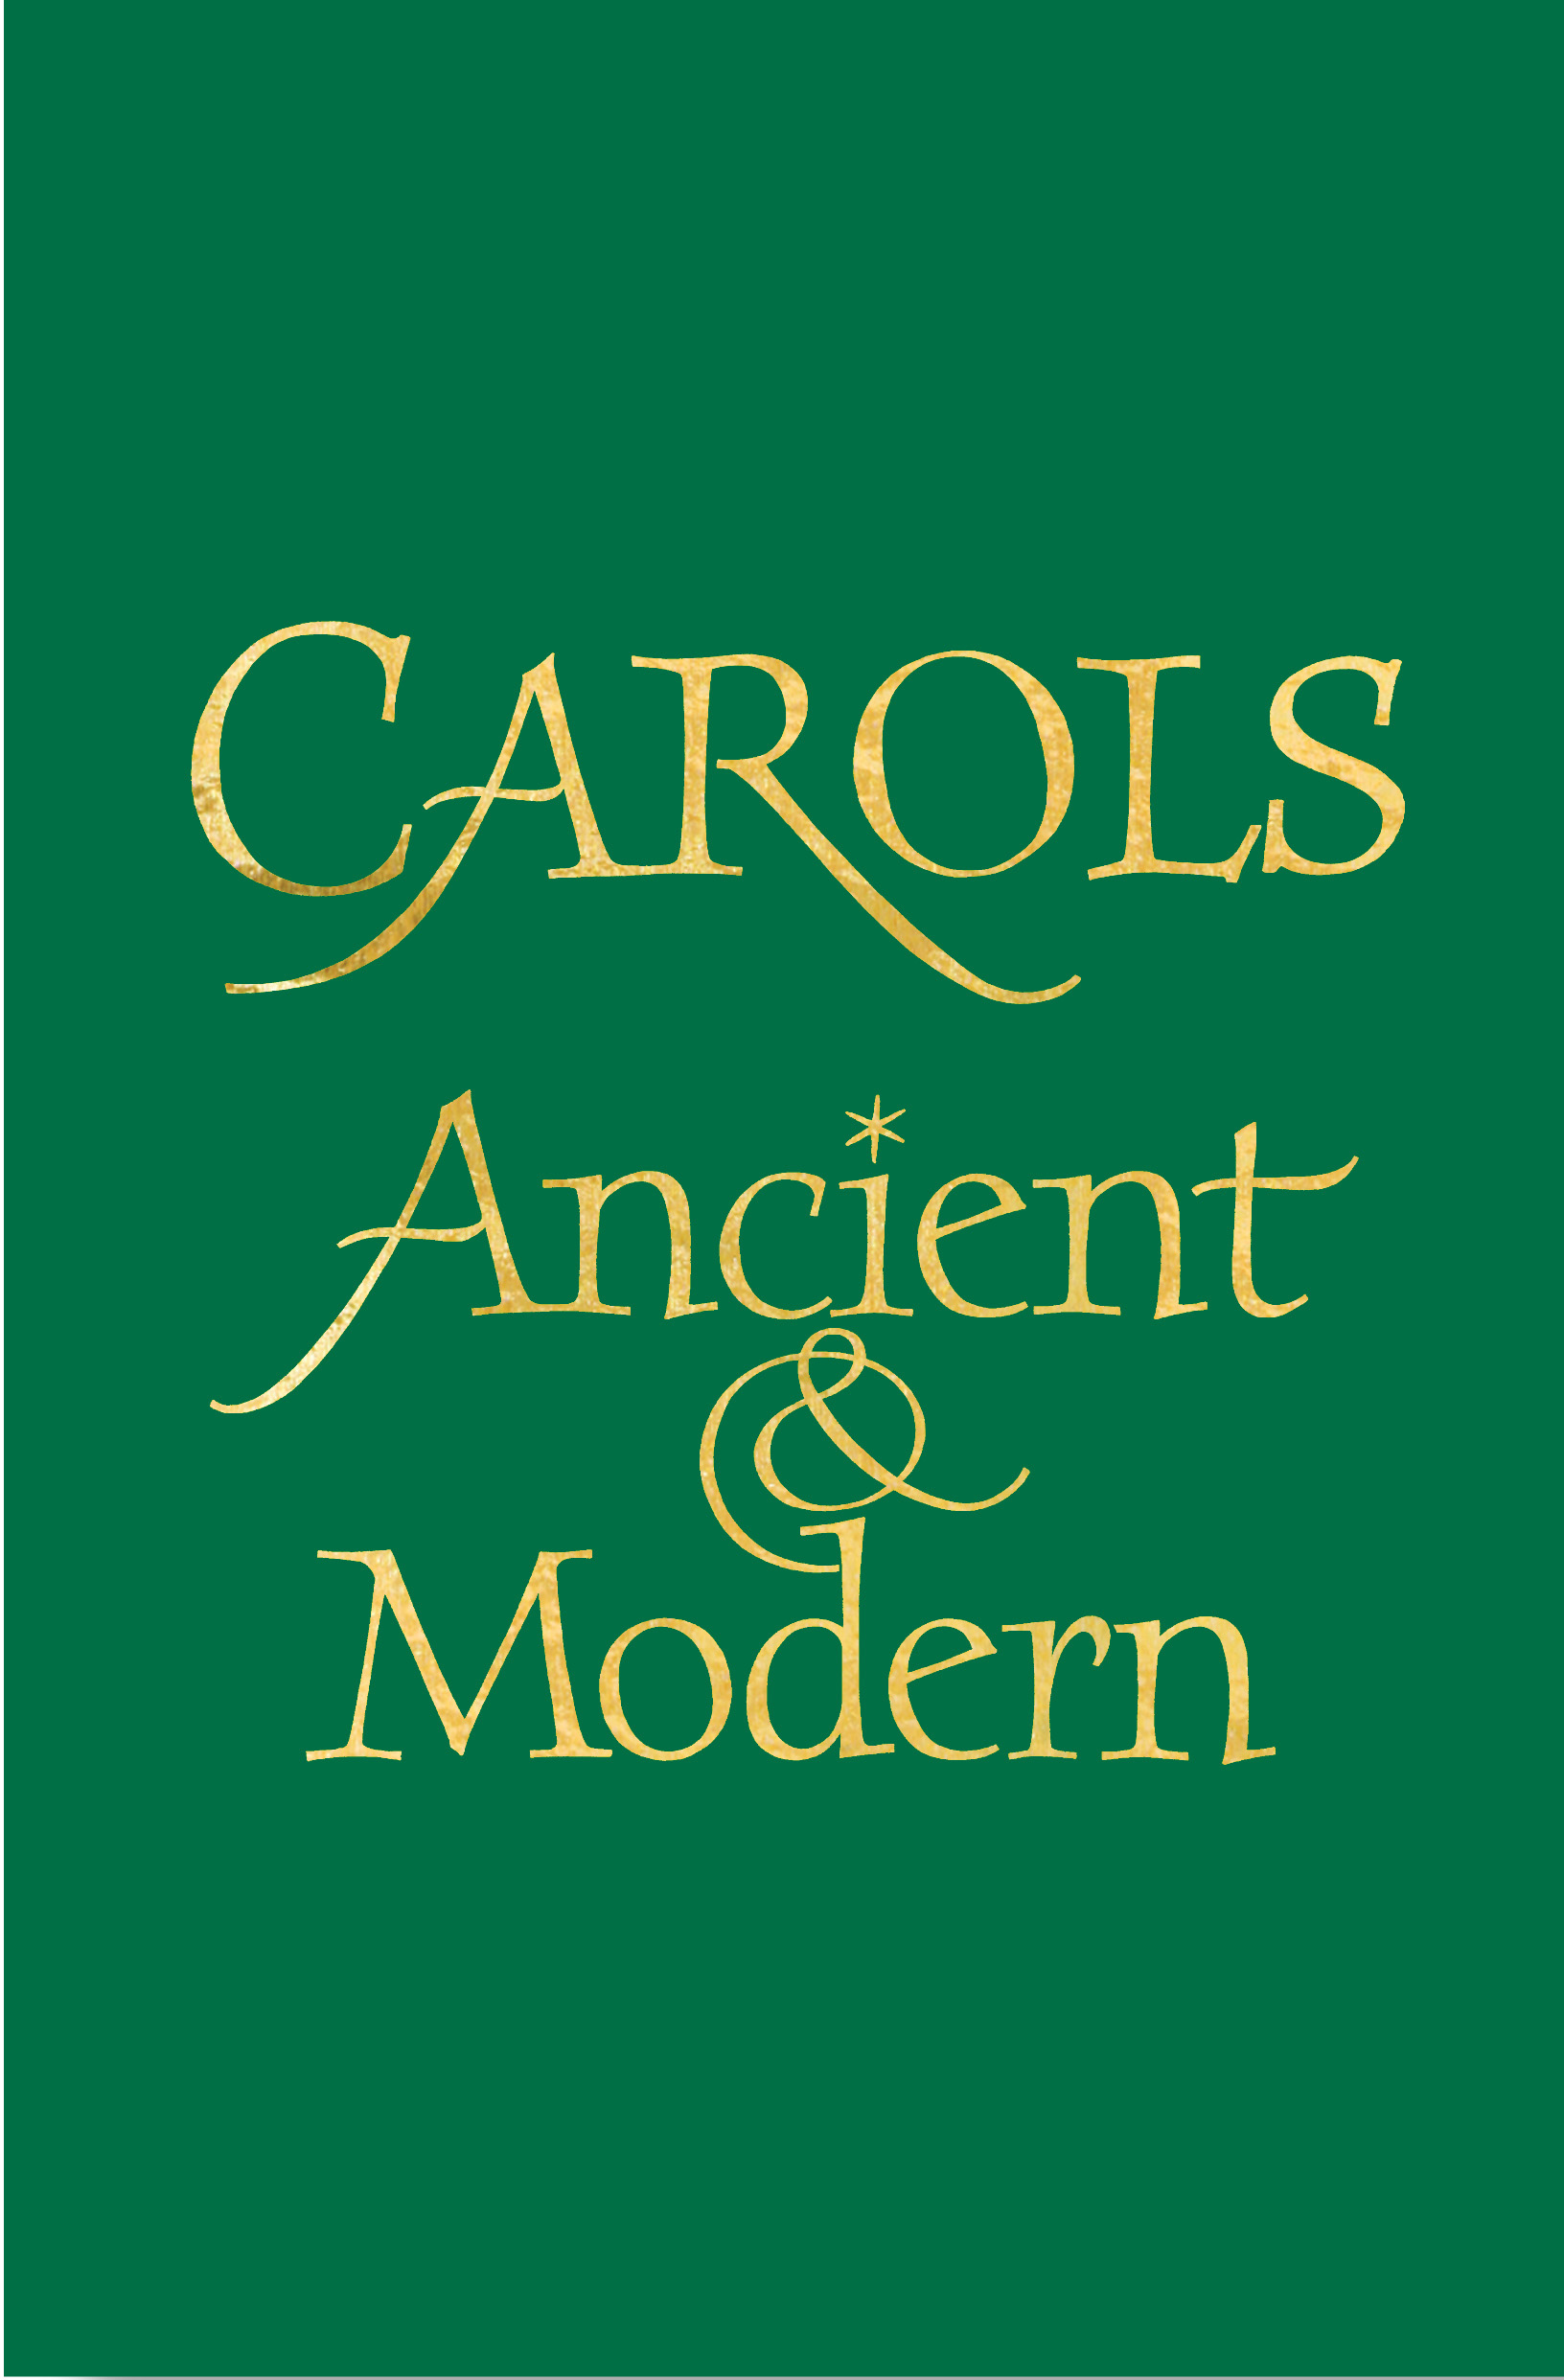 Carols Ancient and Modern Full Music Edition